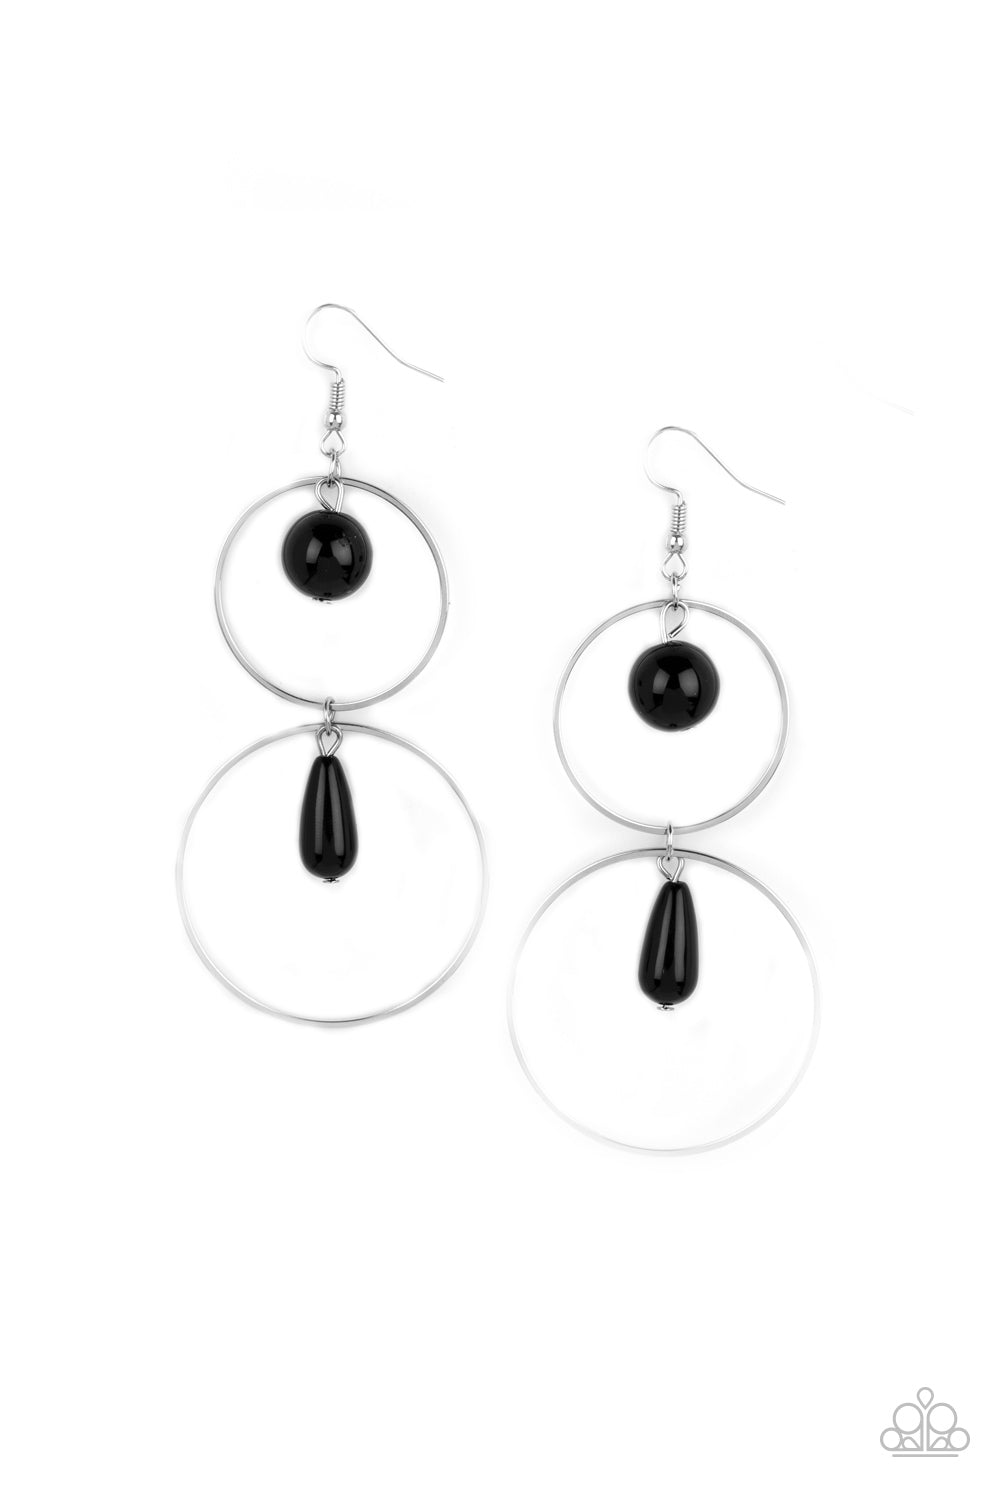 Cultured in Couture - Black Earrings freeshipping - JewLz4u Gemstone Gallery